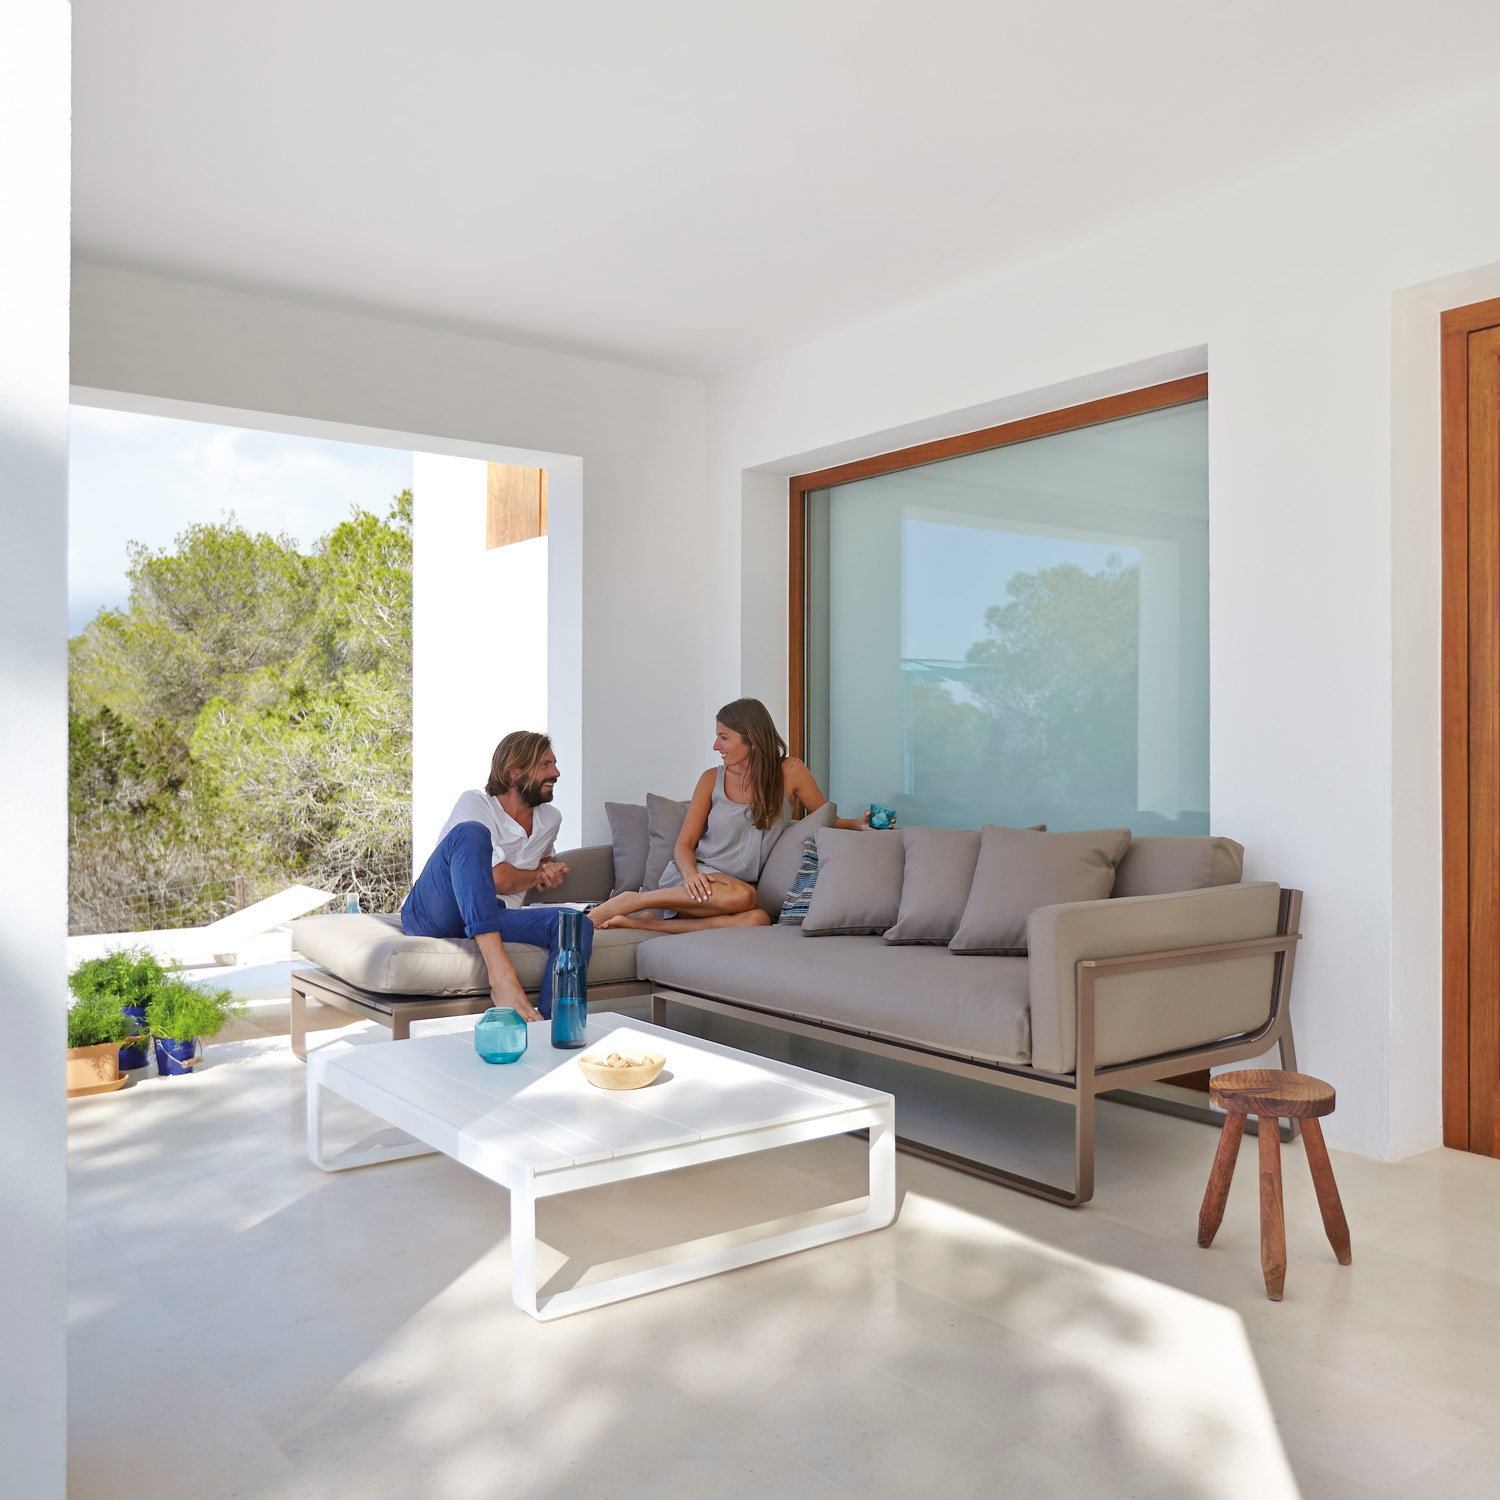 Flat loungemøbler i bronze og hvid giver den perfekte indretning på terrassen fra Gitz Design og Gandia Blasco